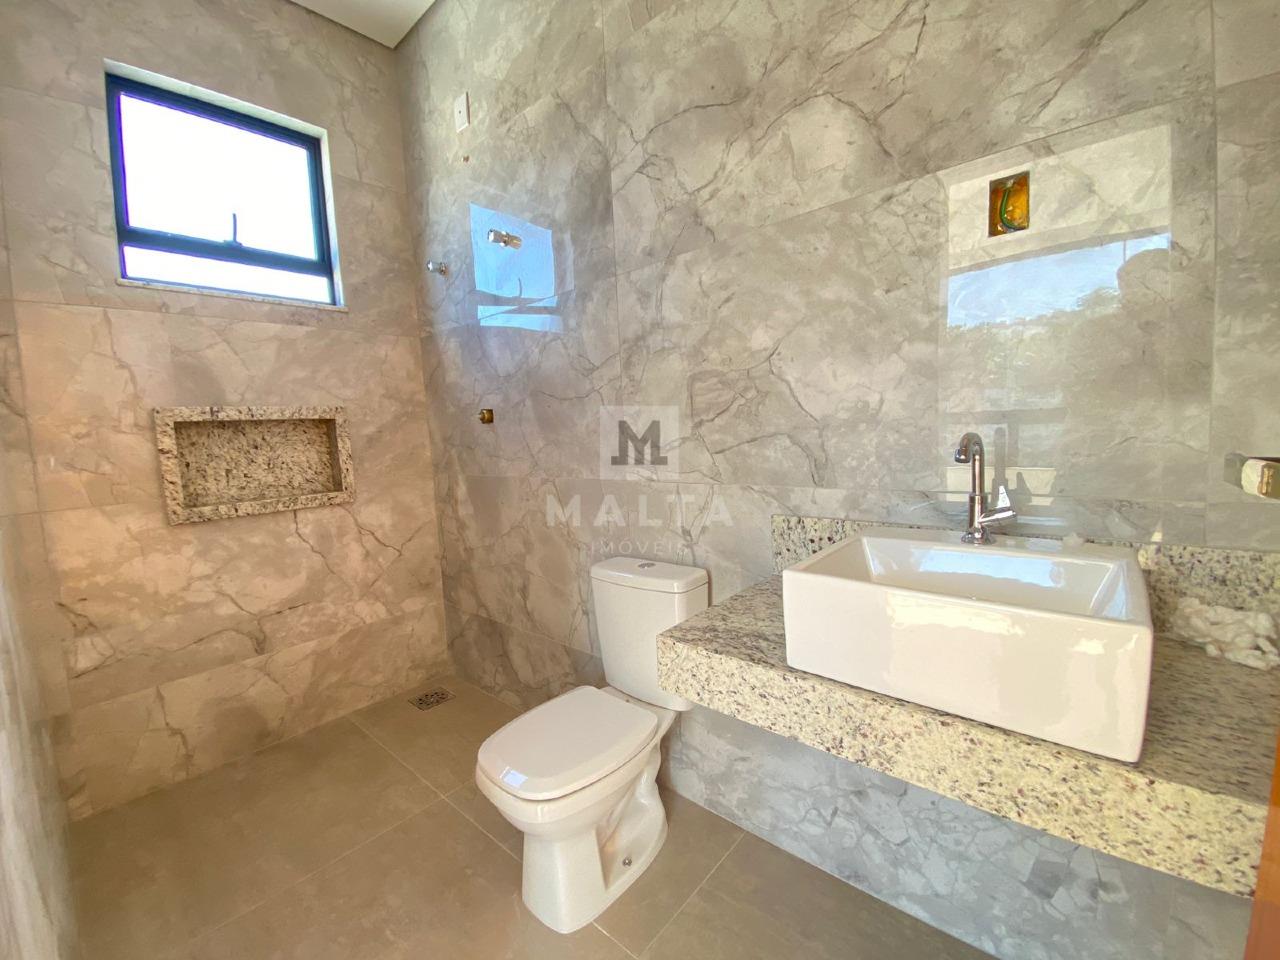 Casa à venda no bairro Masterville de 3 quartos: Banheiro suíte